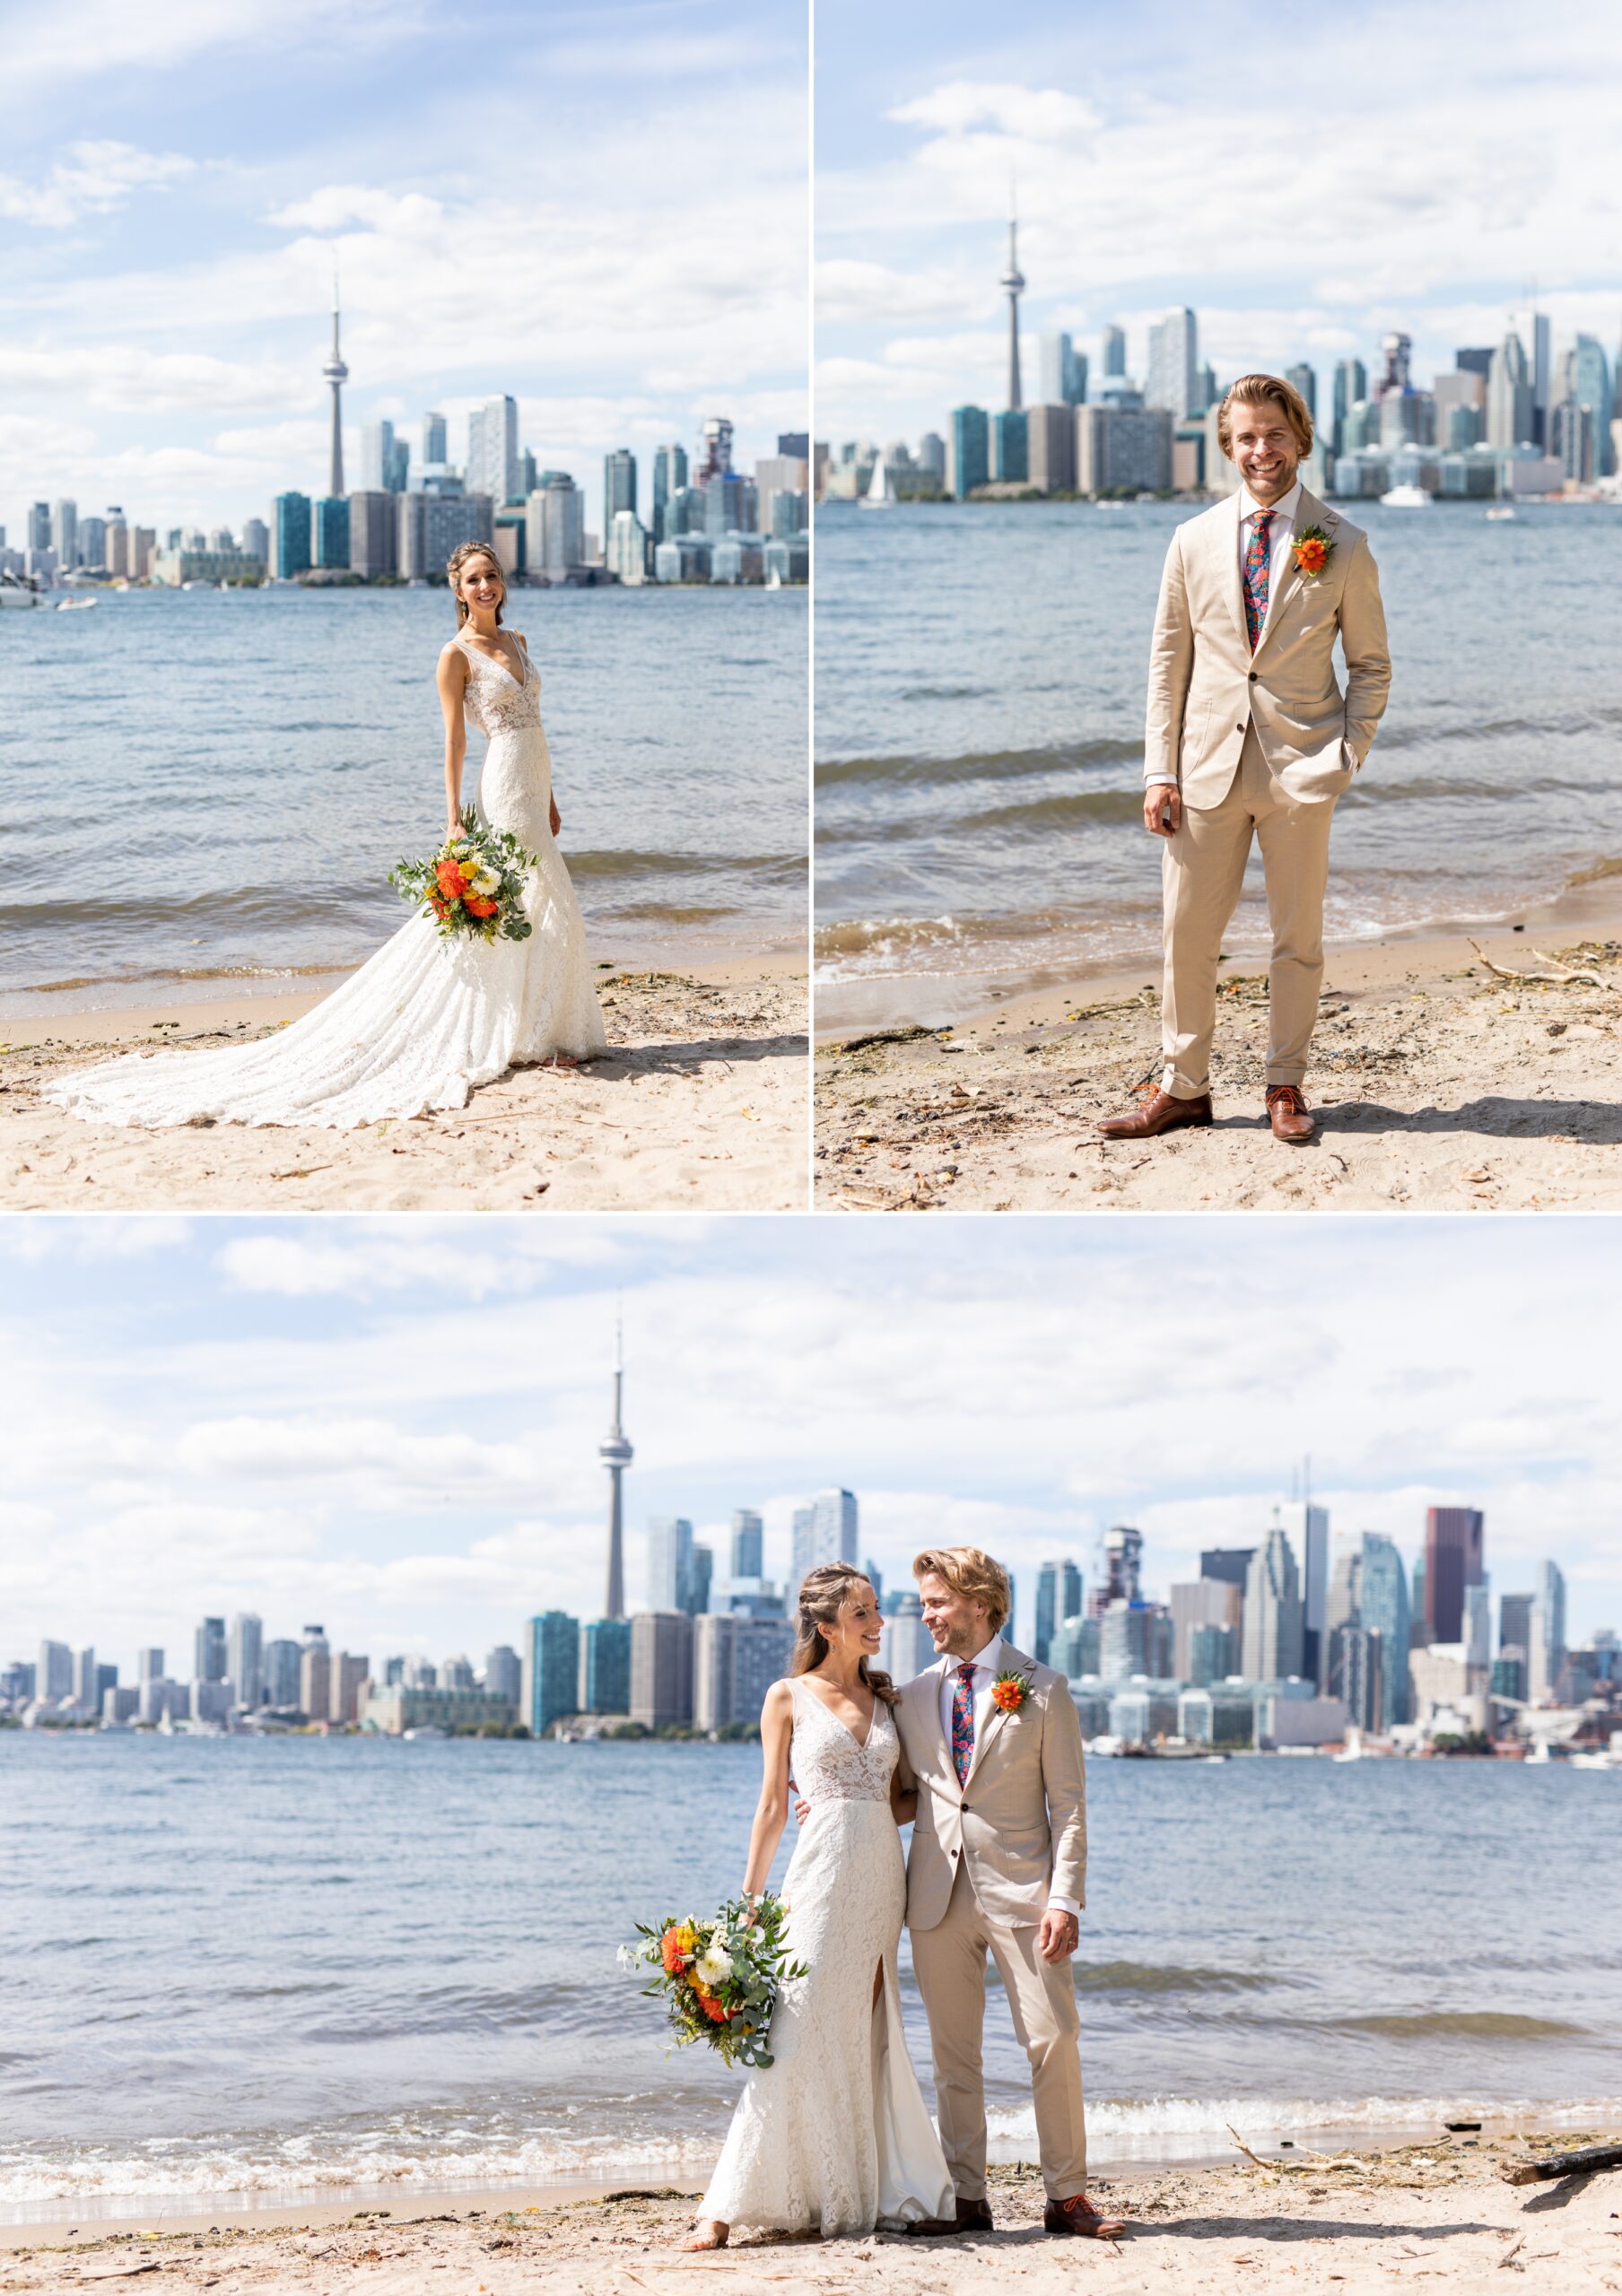 CN Tower and Toronto skyline on Lake Ontario beach with bride and groom